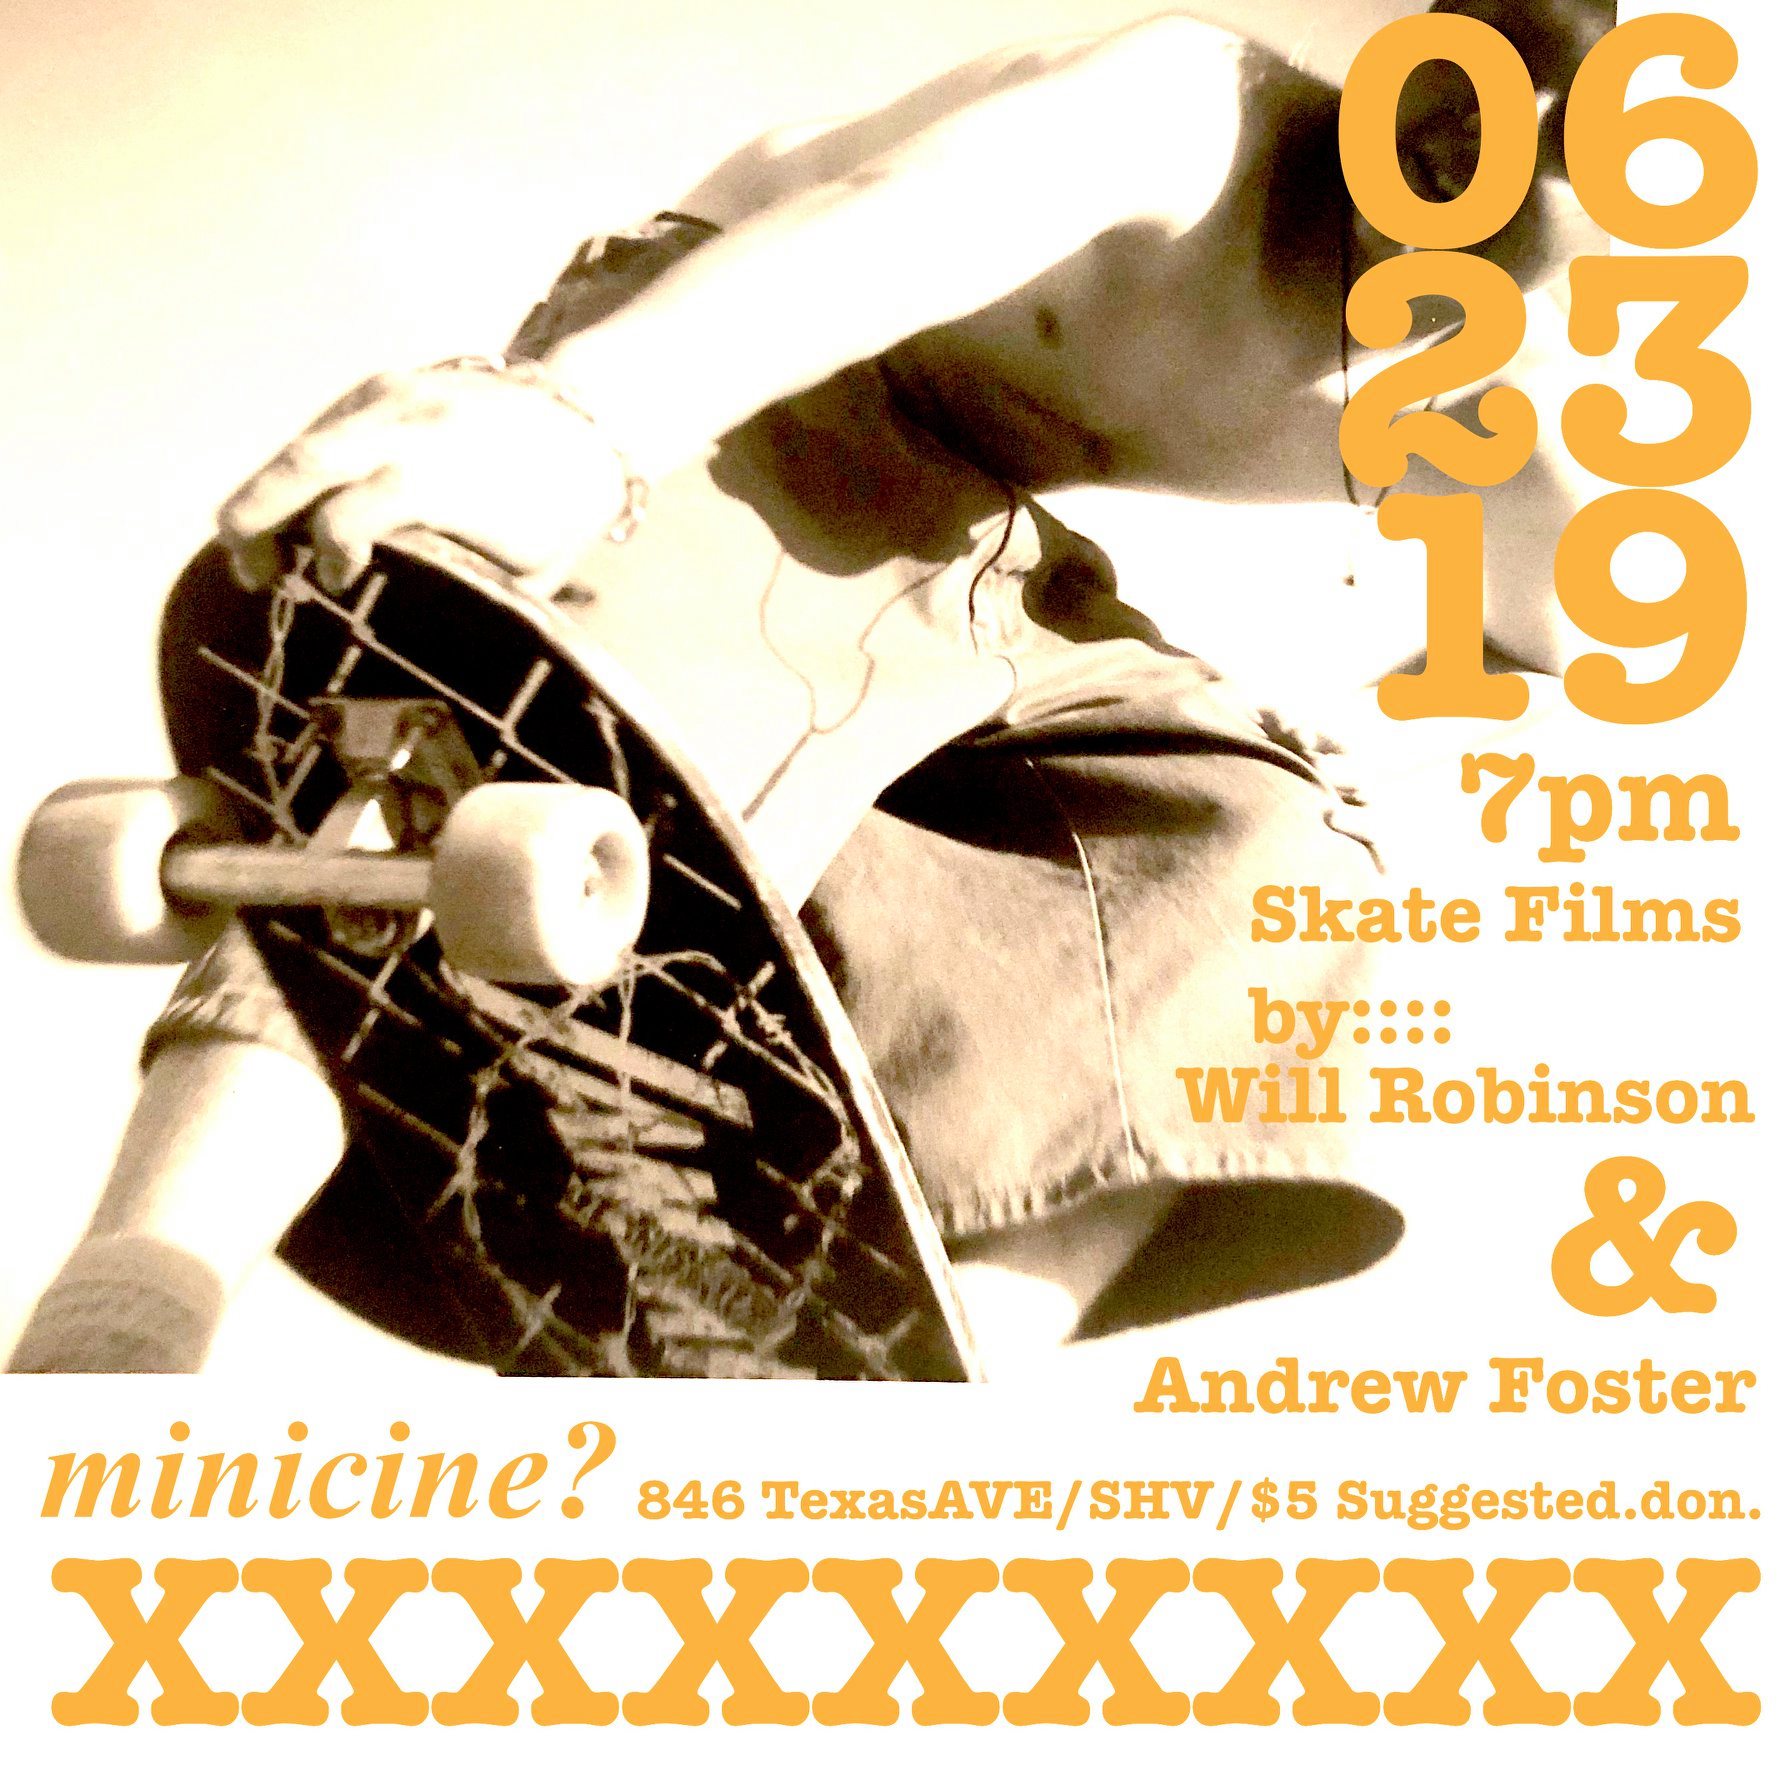 Will Robinson - Skate Films flyer